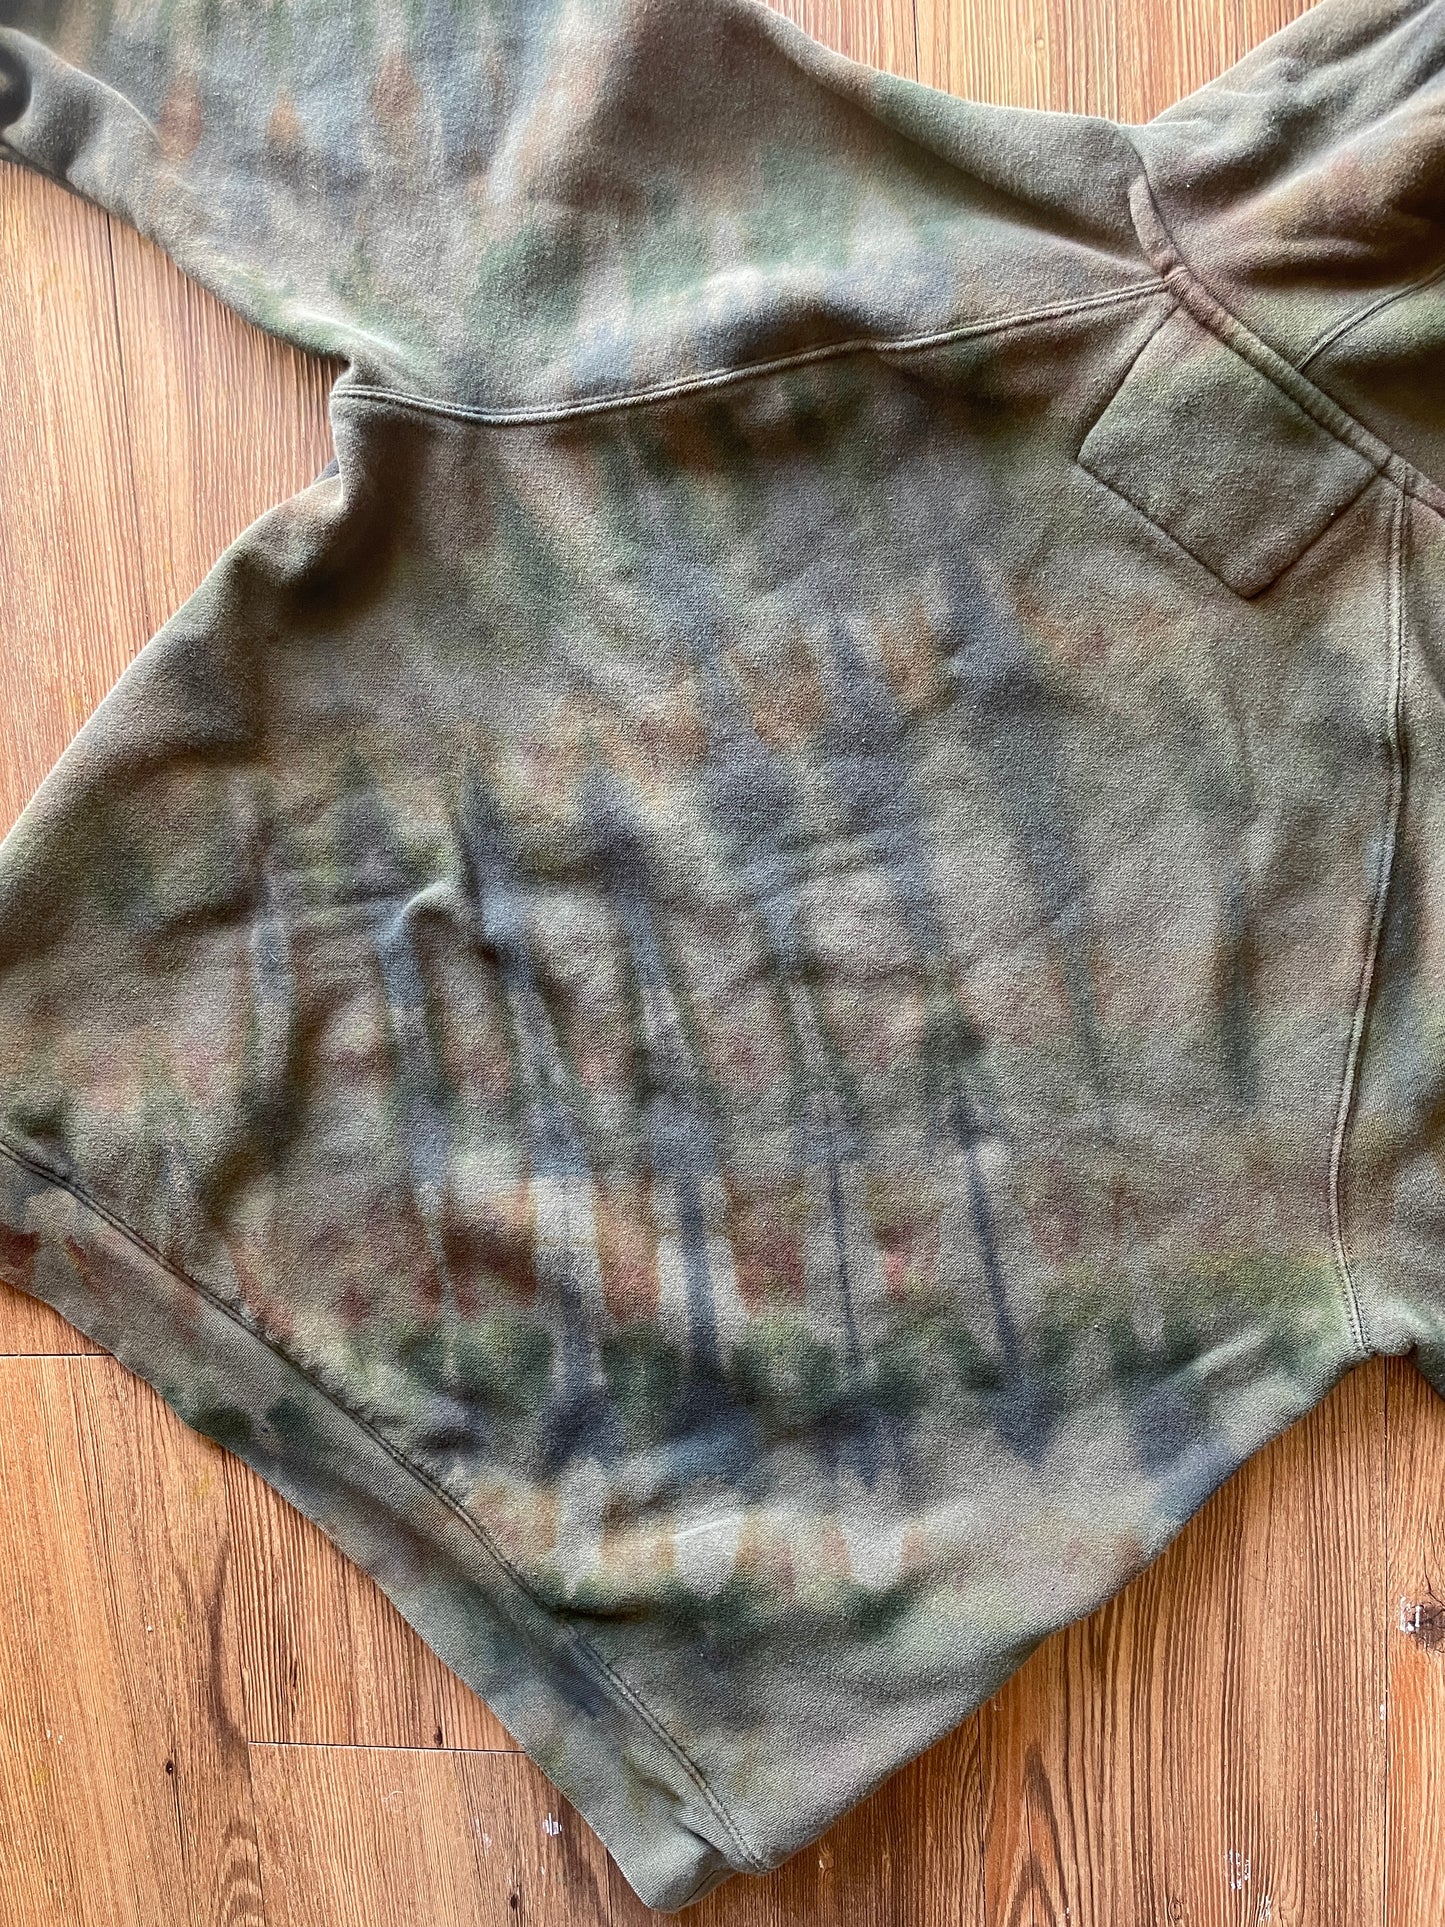 XL Men’s Handmade Earth Tones Tie Dye Hoodie | One-Of-a-Kind Olive Green and Gray Long Sleeve Sweatshirt